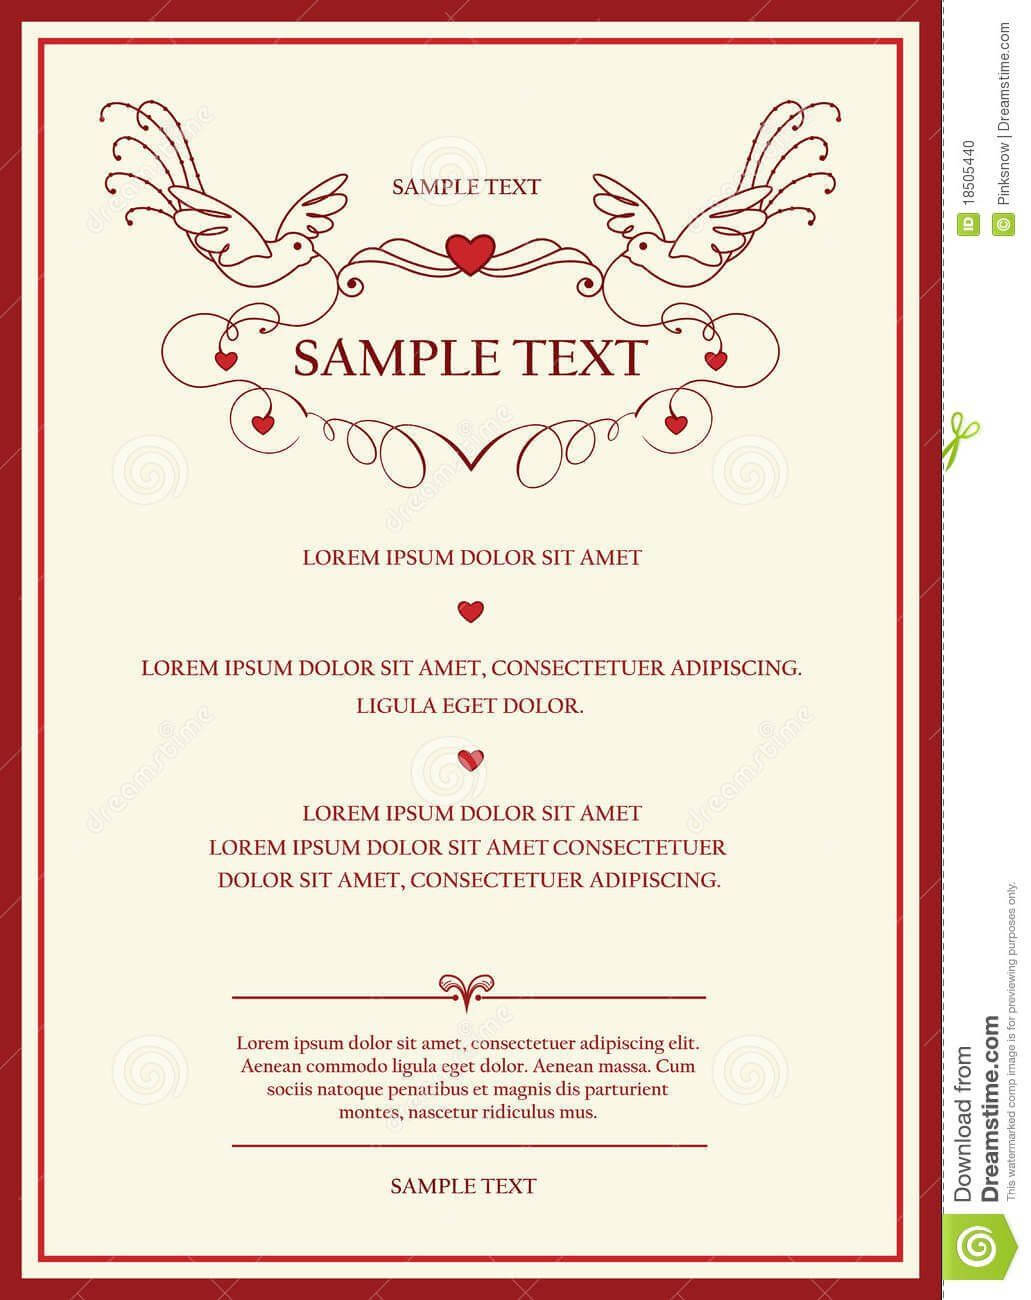 Wedding Invitation Cards Templates | Wedding Invitation Card Regarding Sample Wedding Invitation Cards Templates